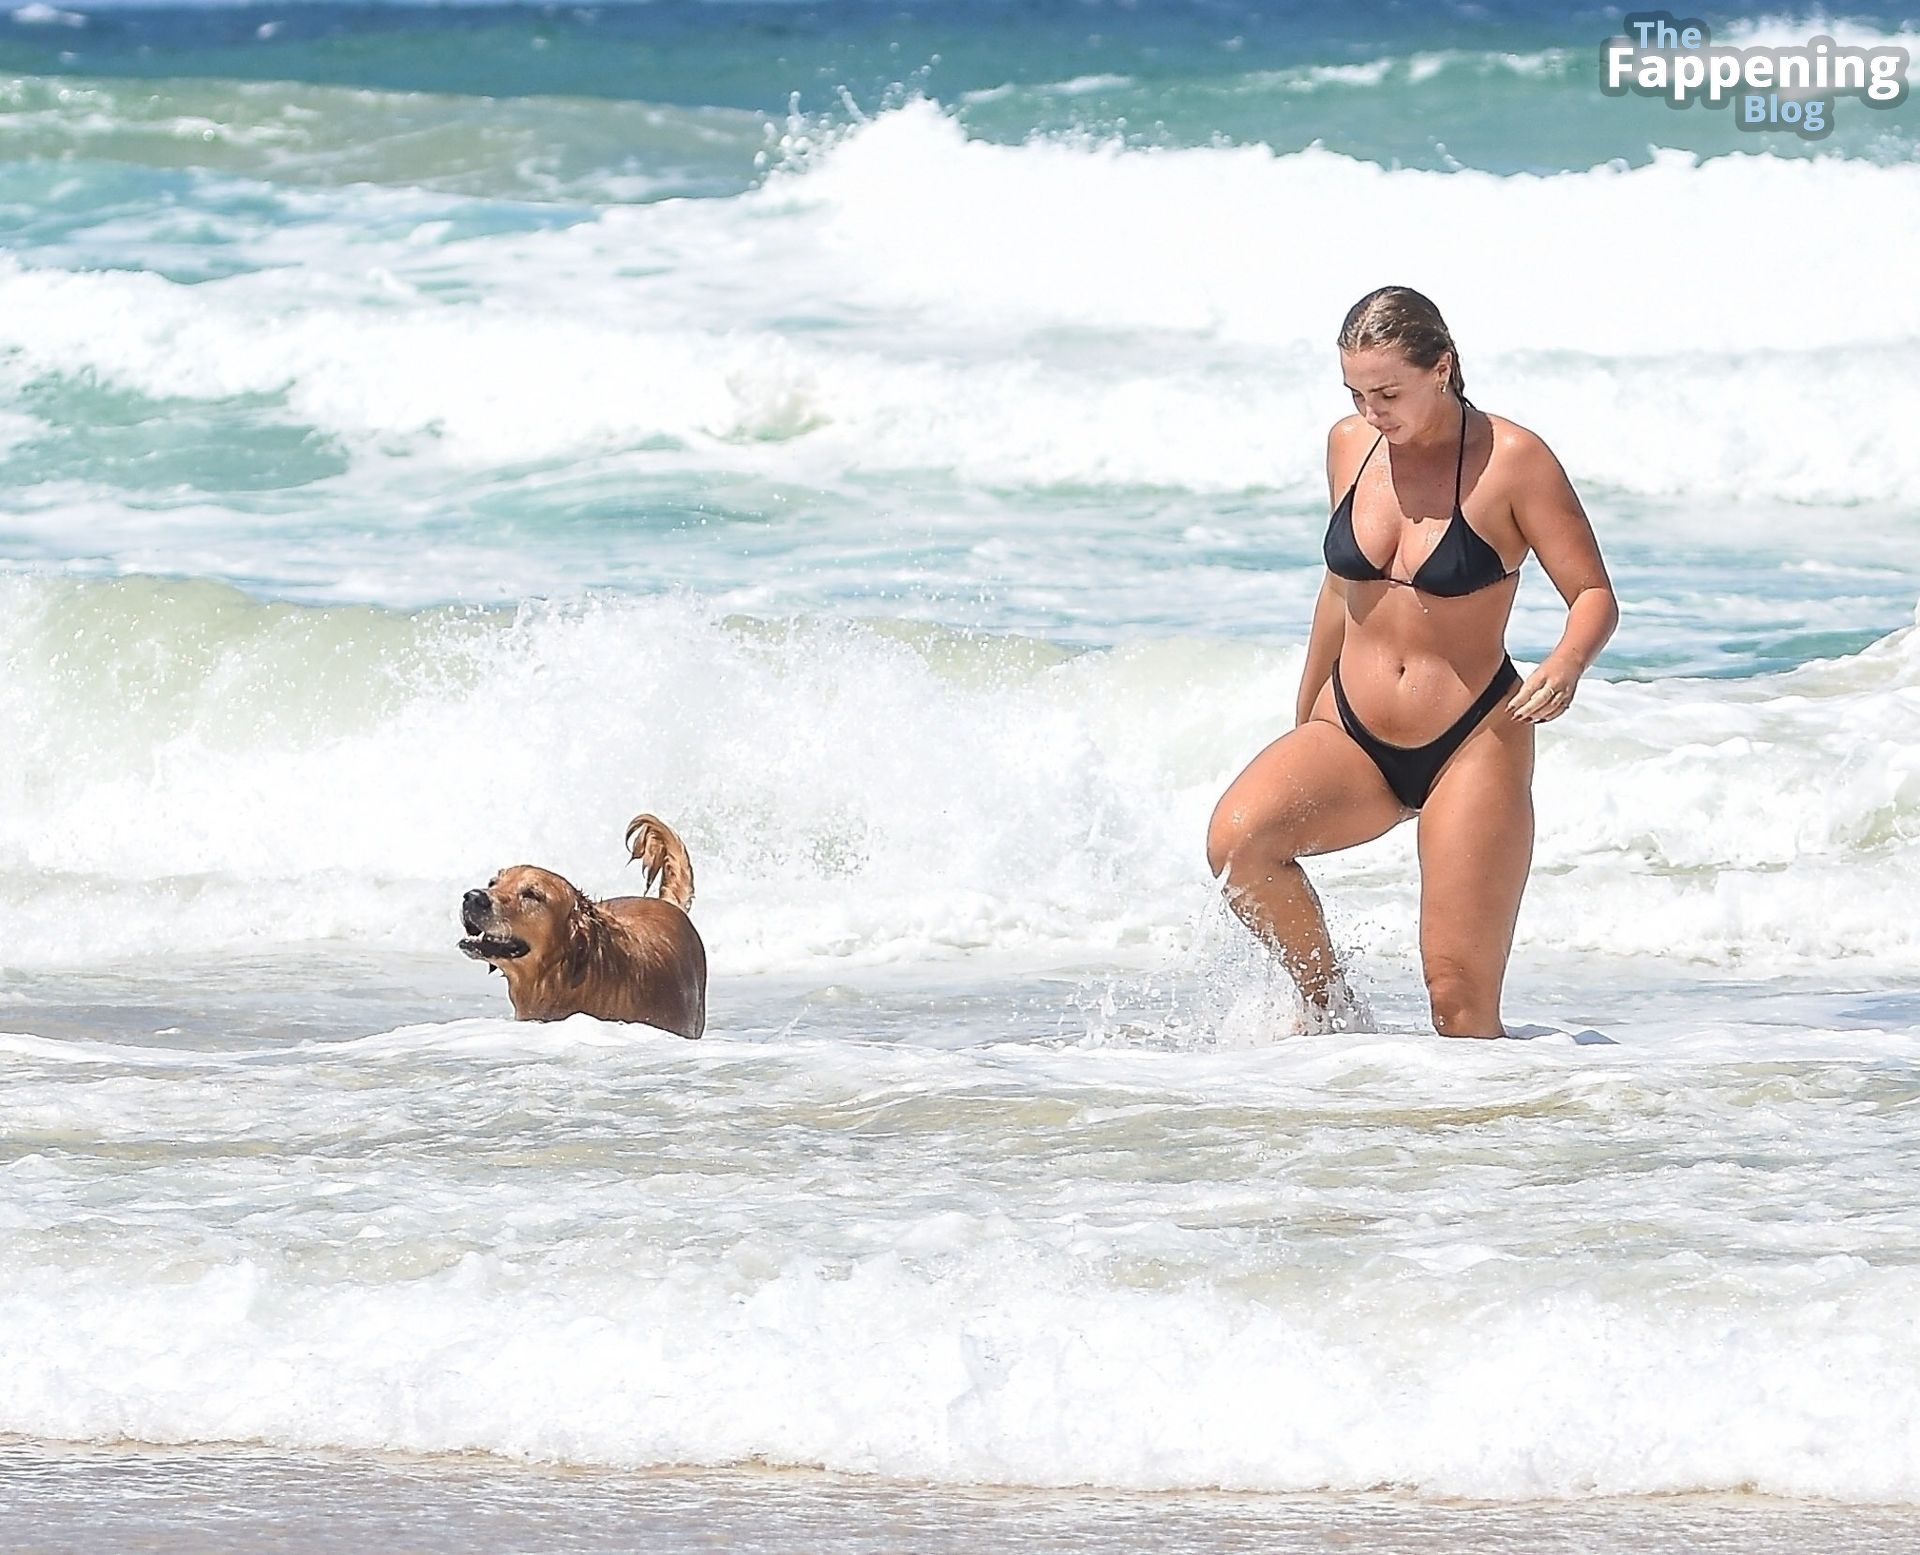 Eden Harper Shows Off Her Sexy Bikini Body on the Beach (44 Photos)